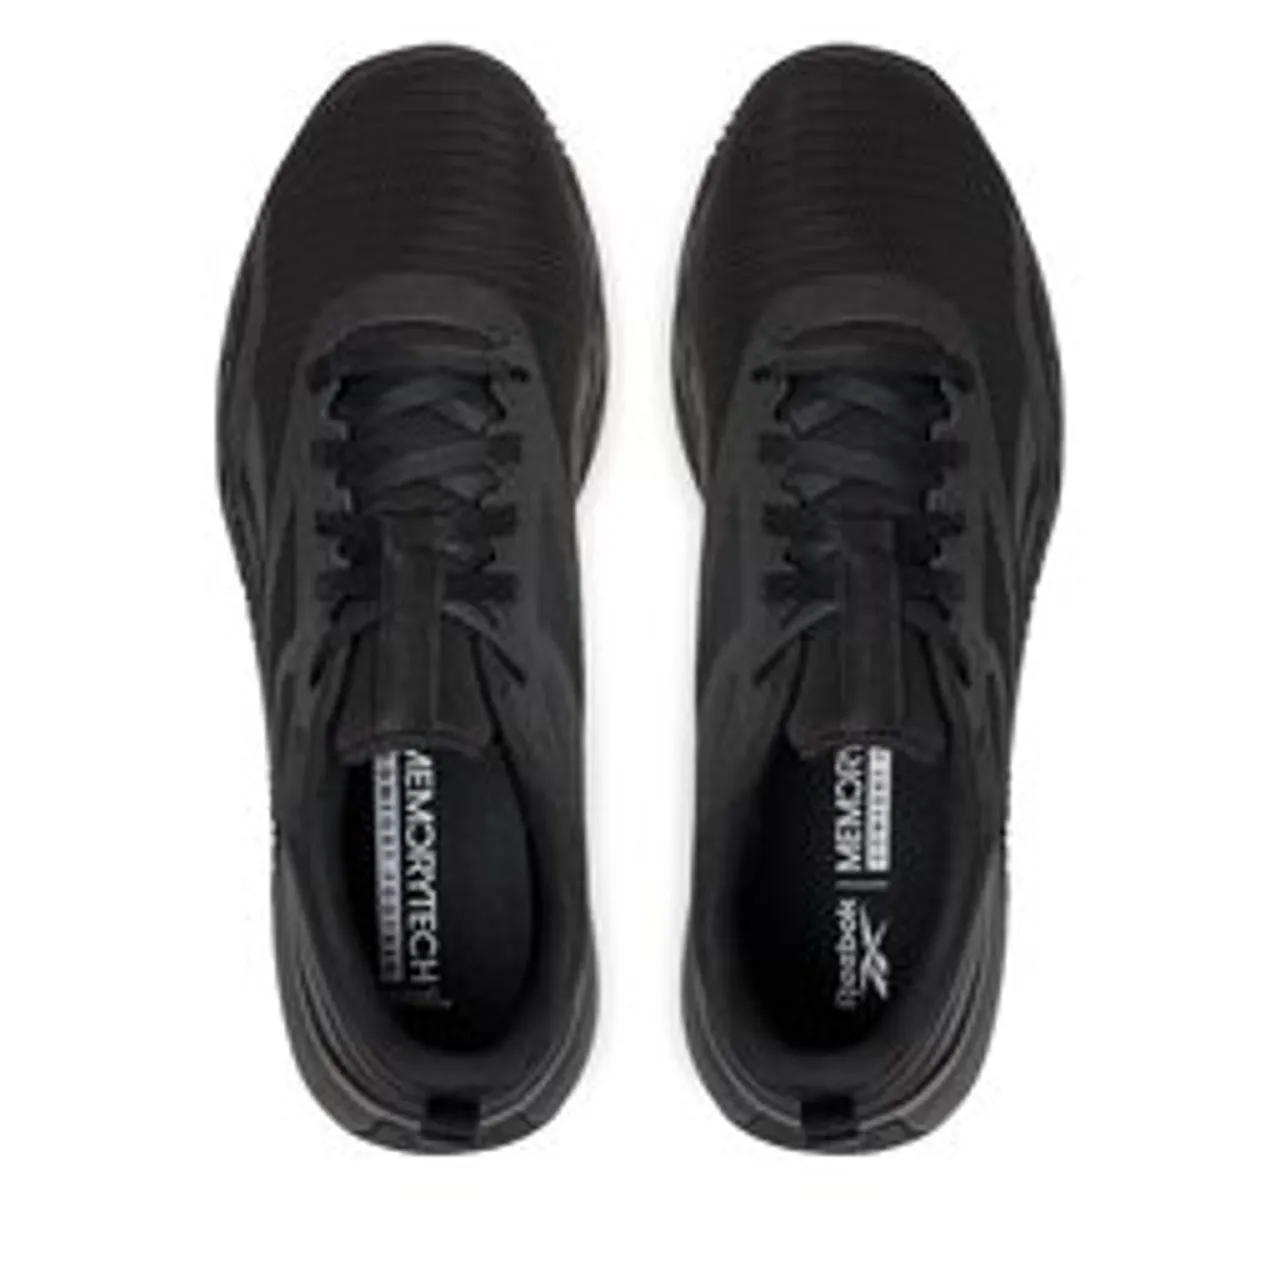 Schuhe Reebok NFX Trainers ID5030 Black